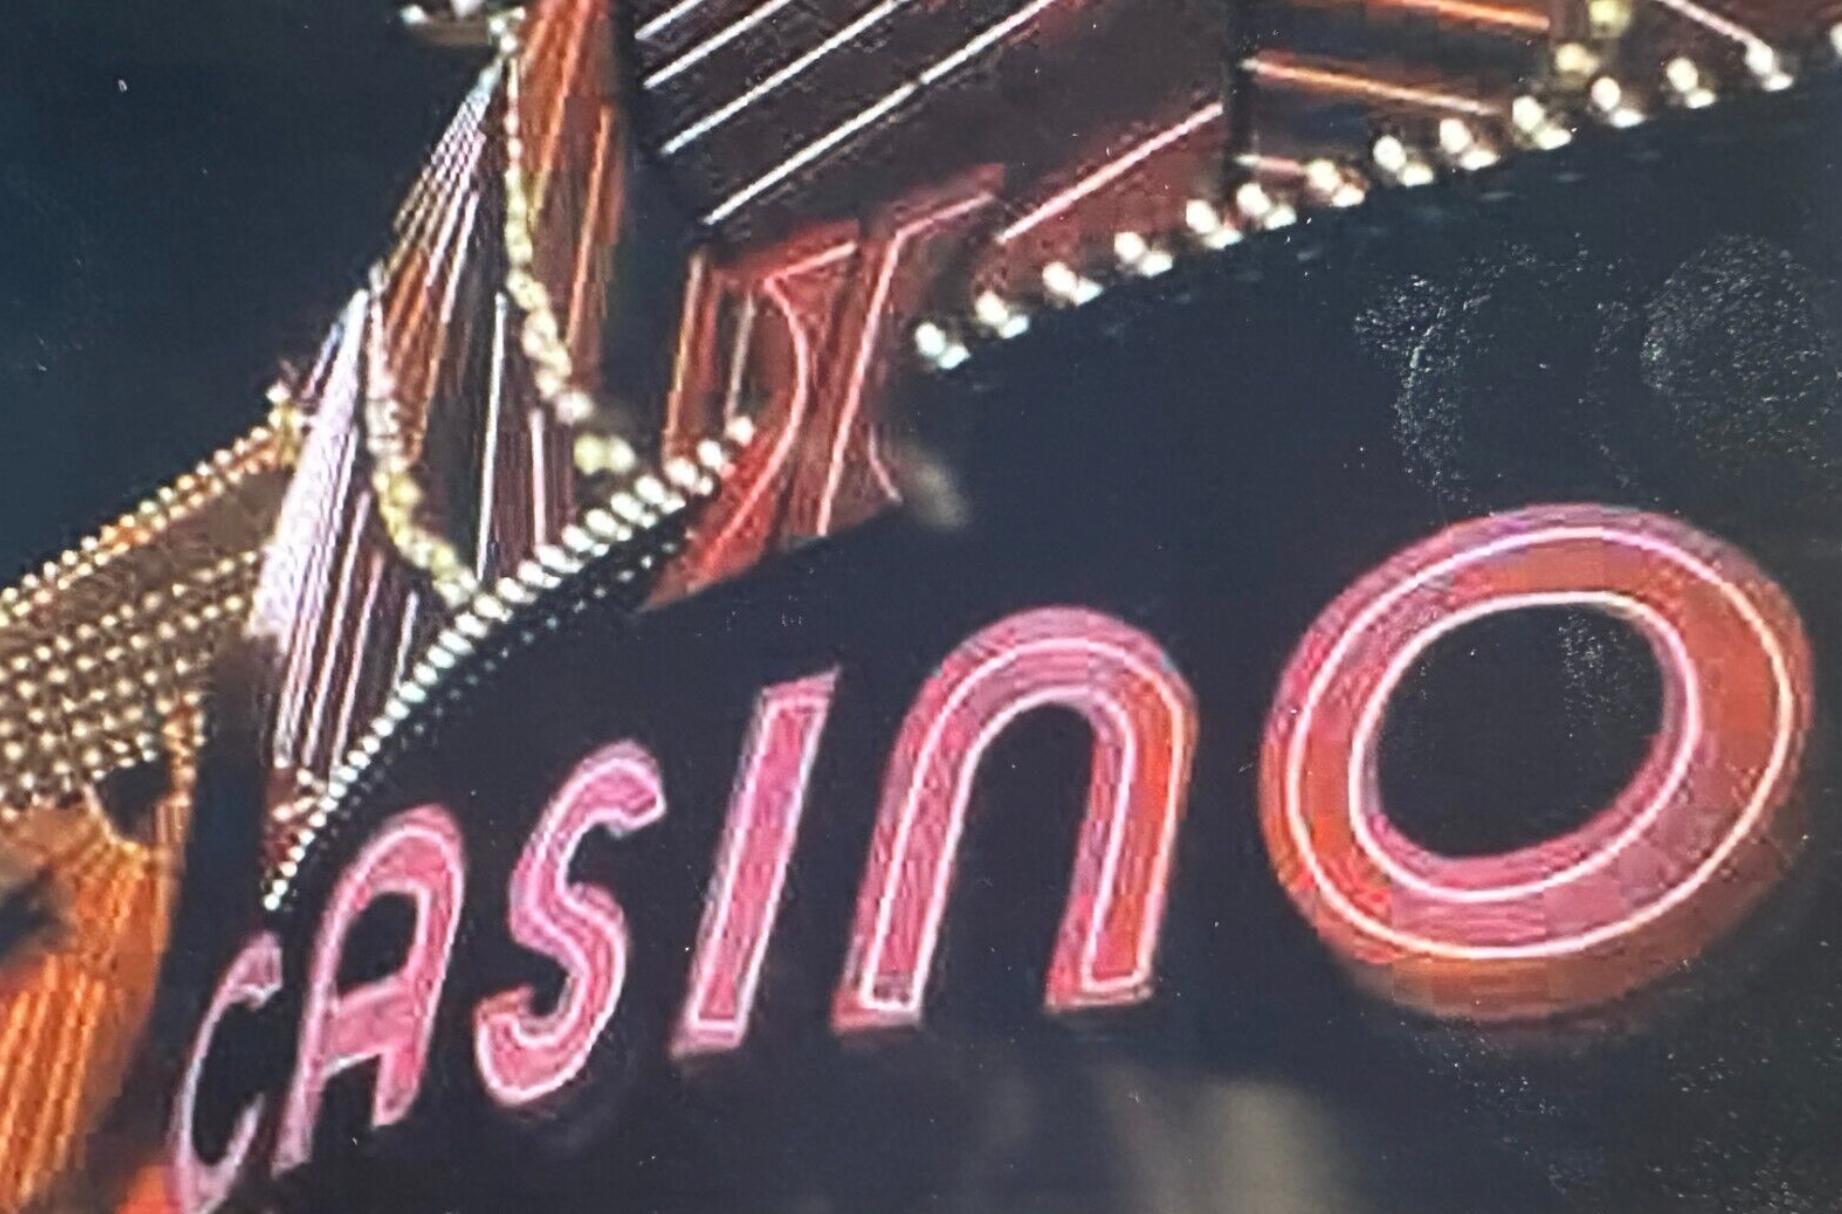 Casino - Original Oil Painting by Renowned Photorealist Mark Schiff 1